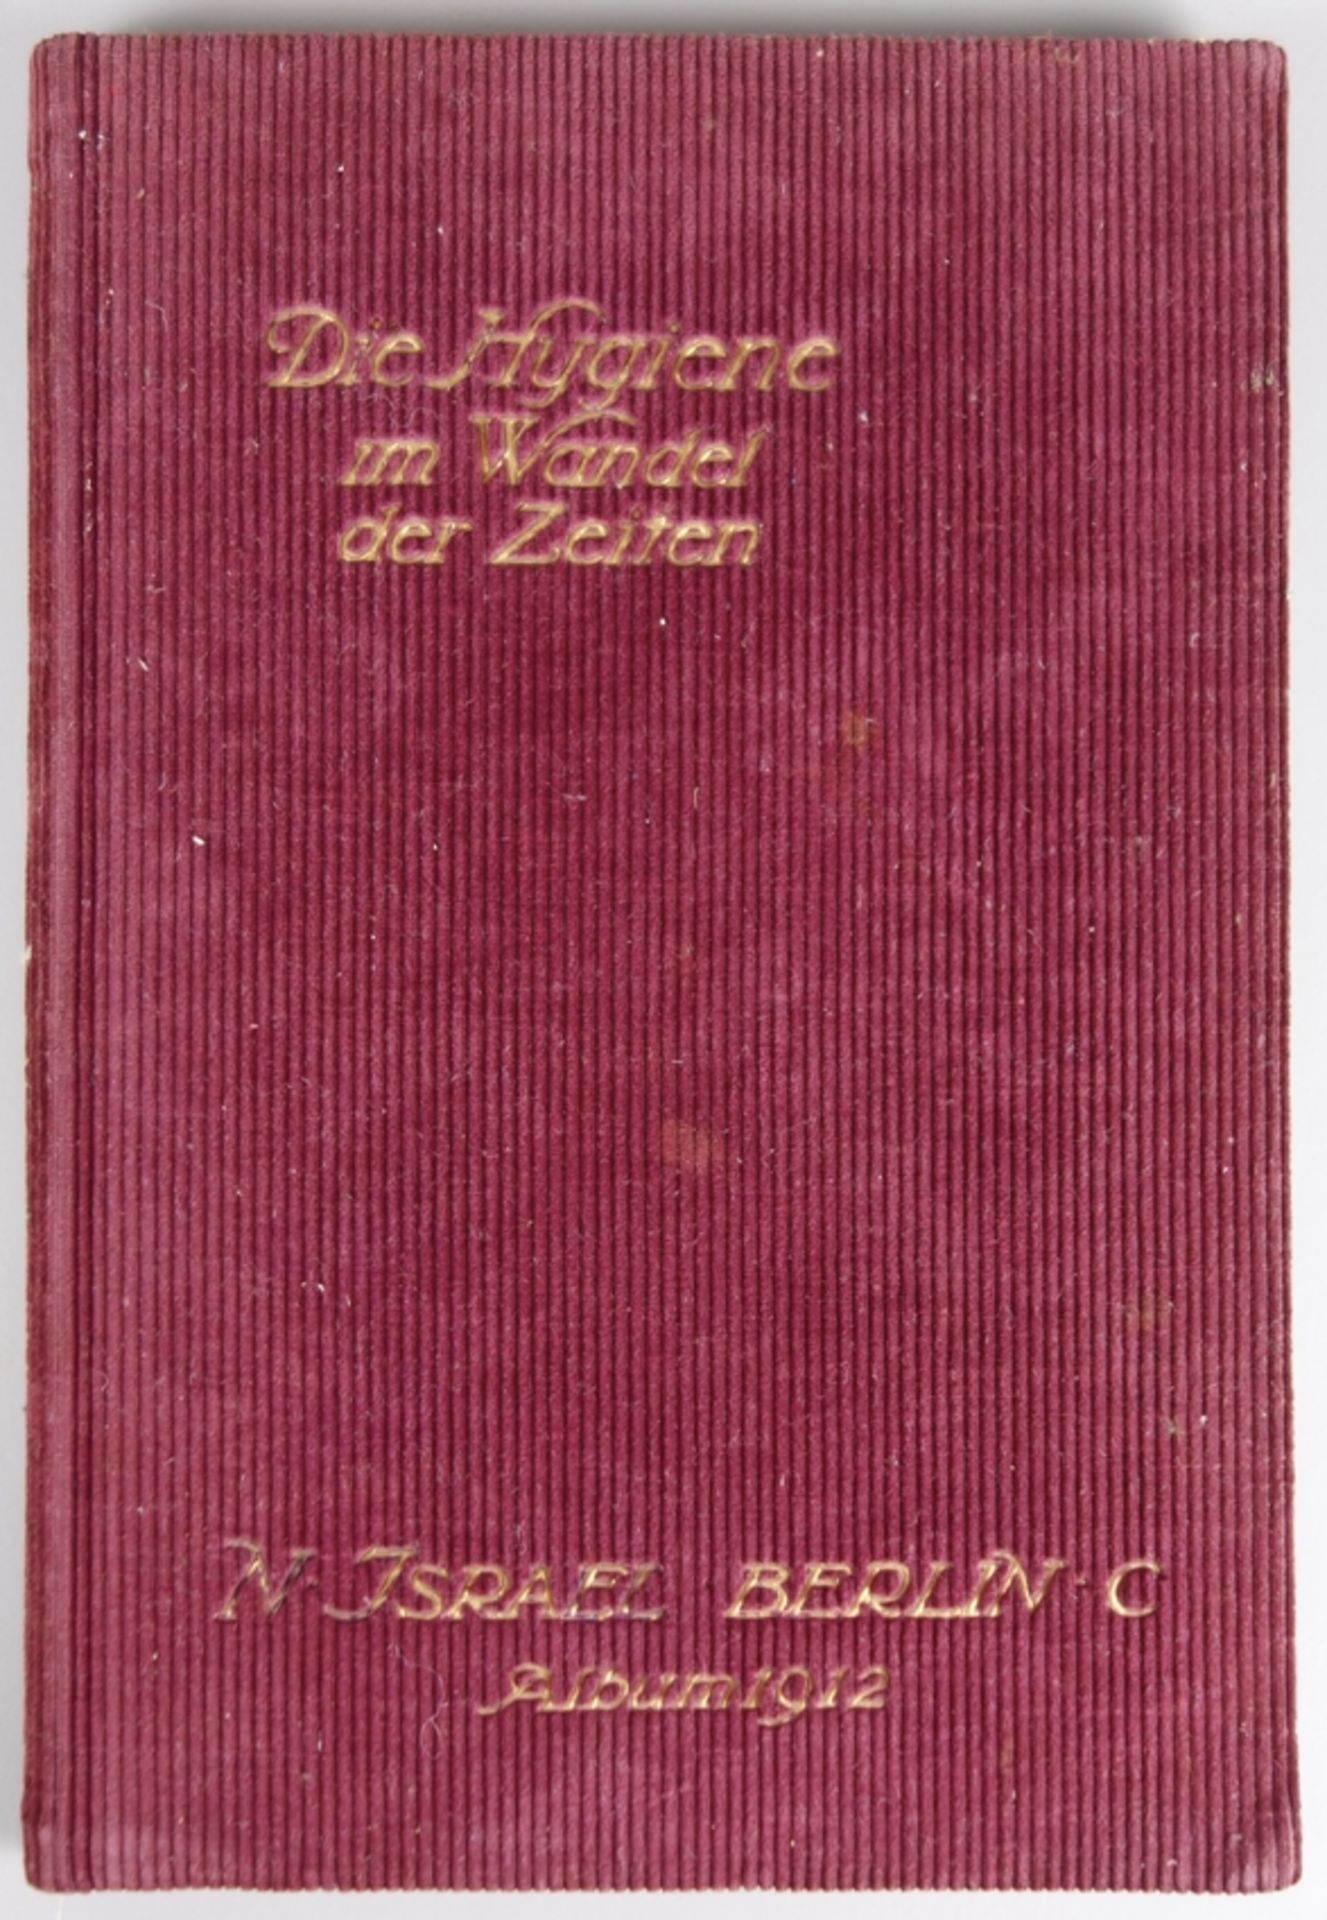 Die Hygiene im Wandel der Zeit, N.Israel, Berlin, Album 1912